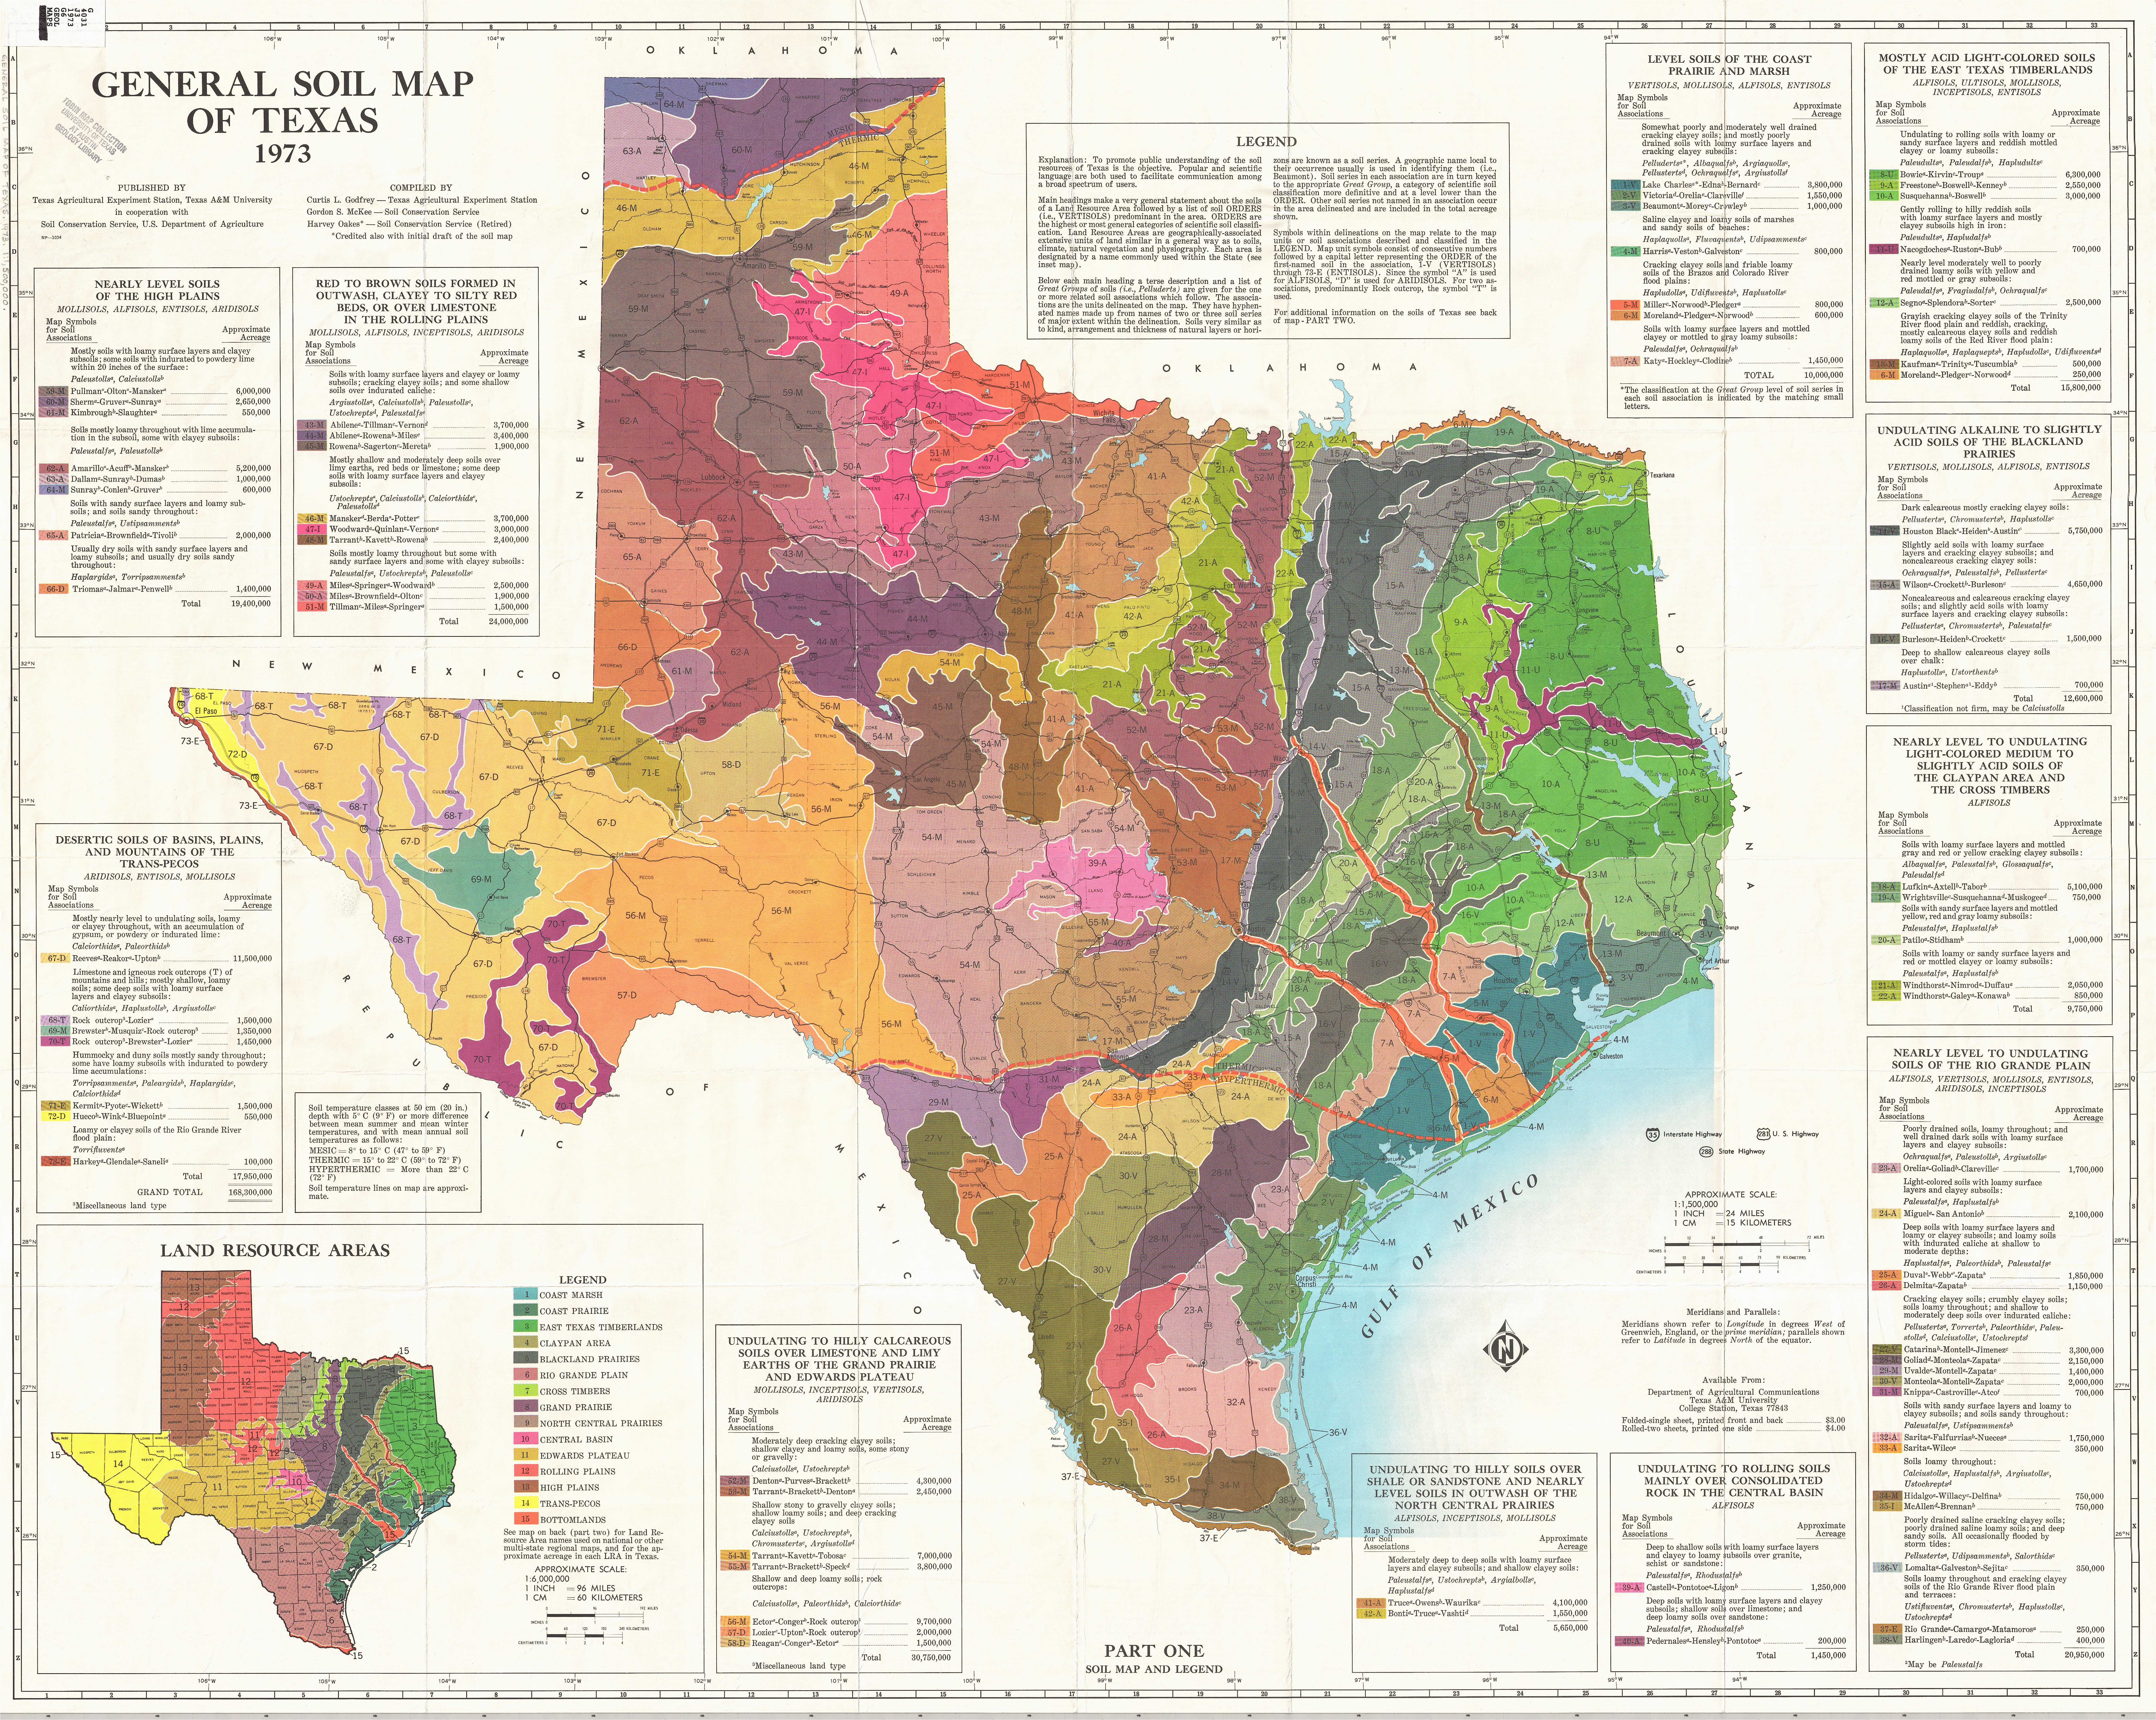 texas railroad commission gis map business ideas 2013